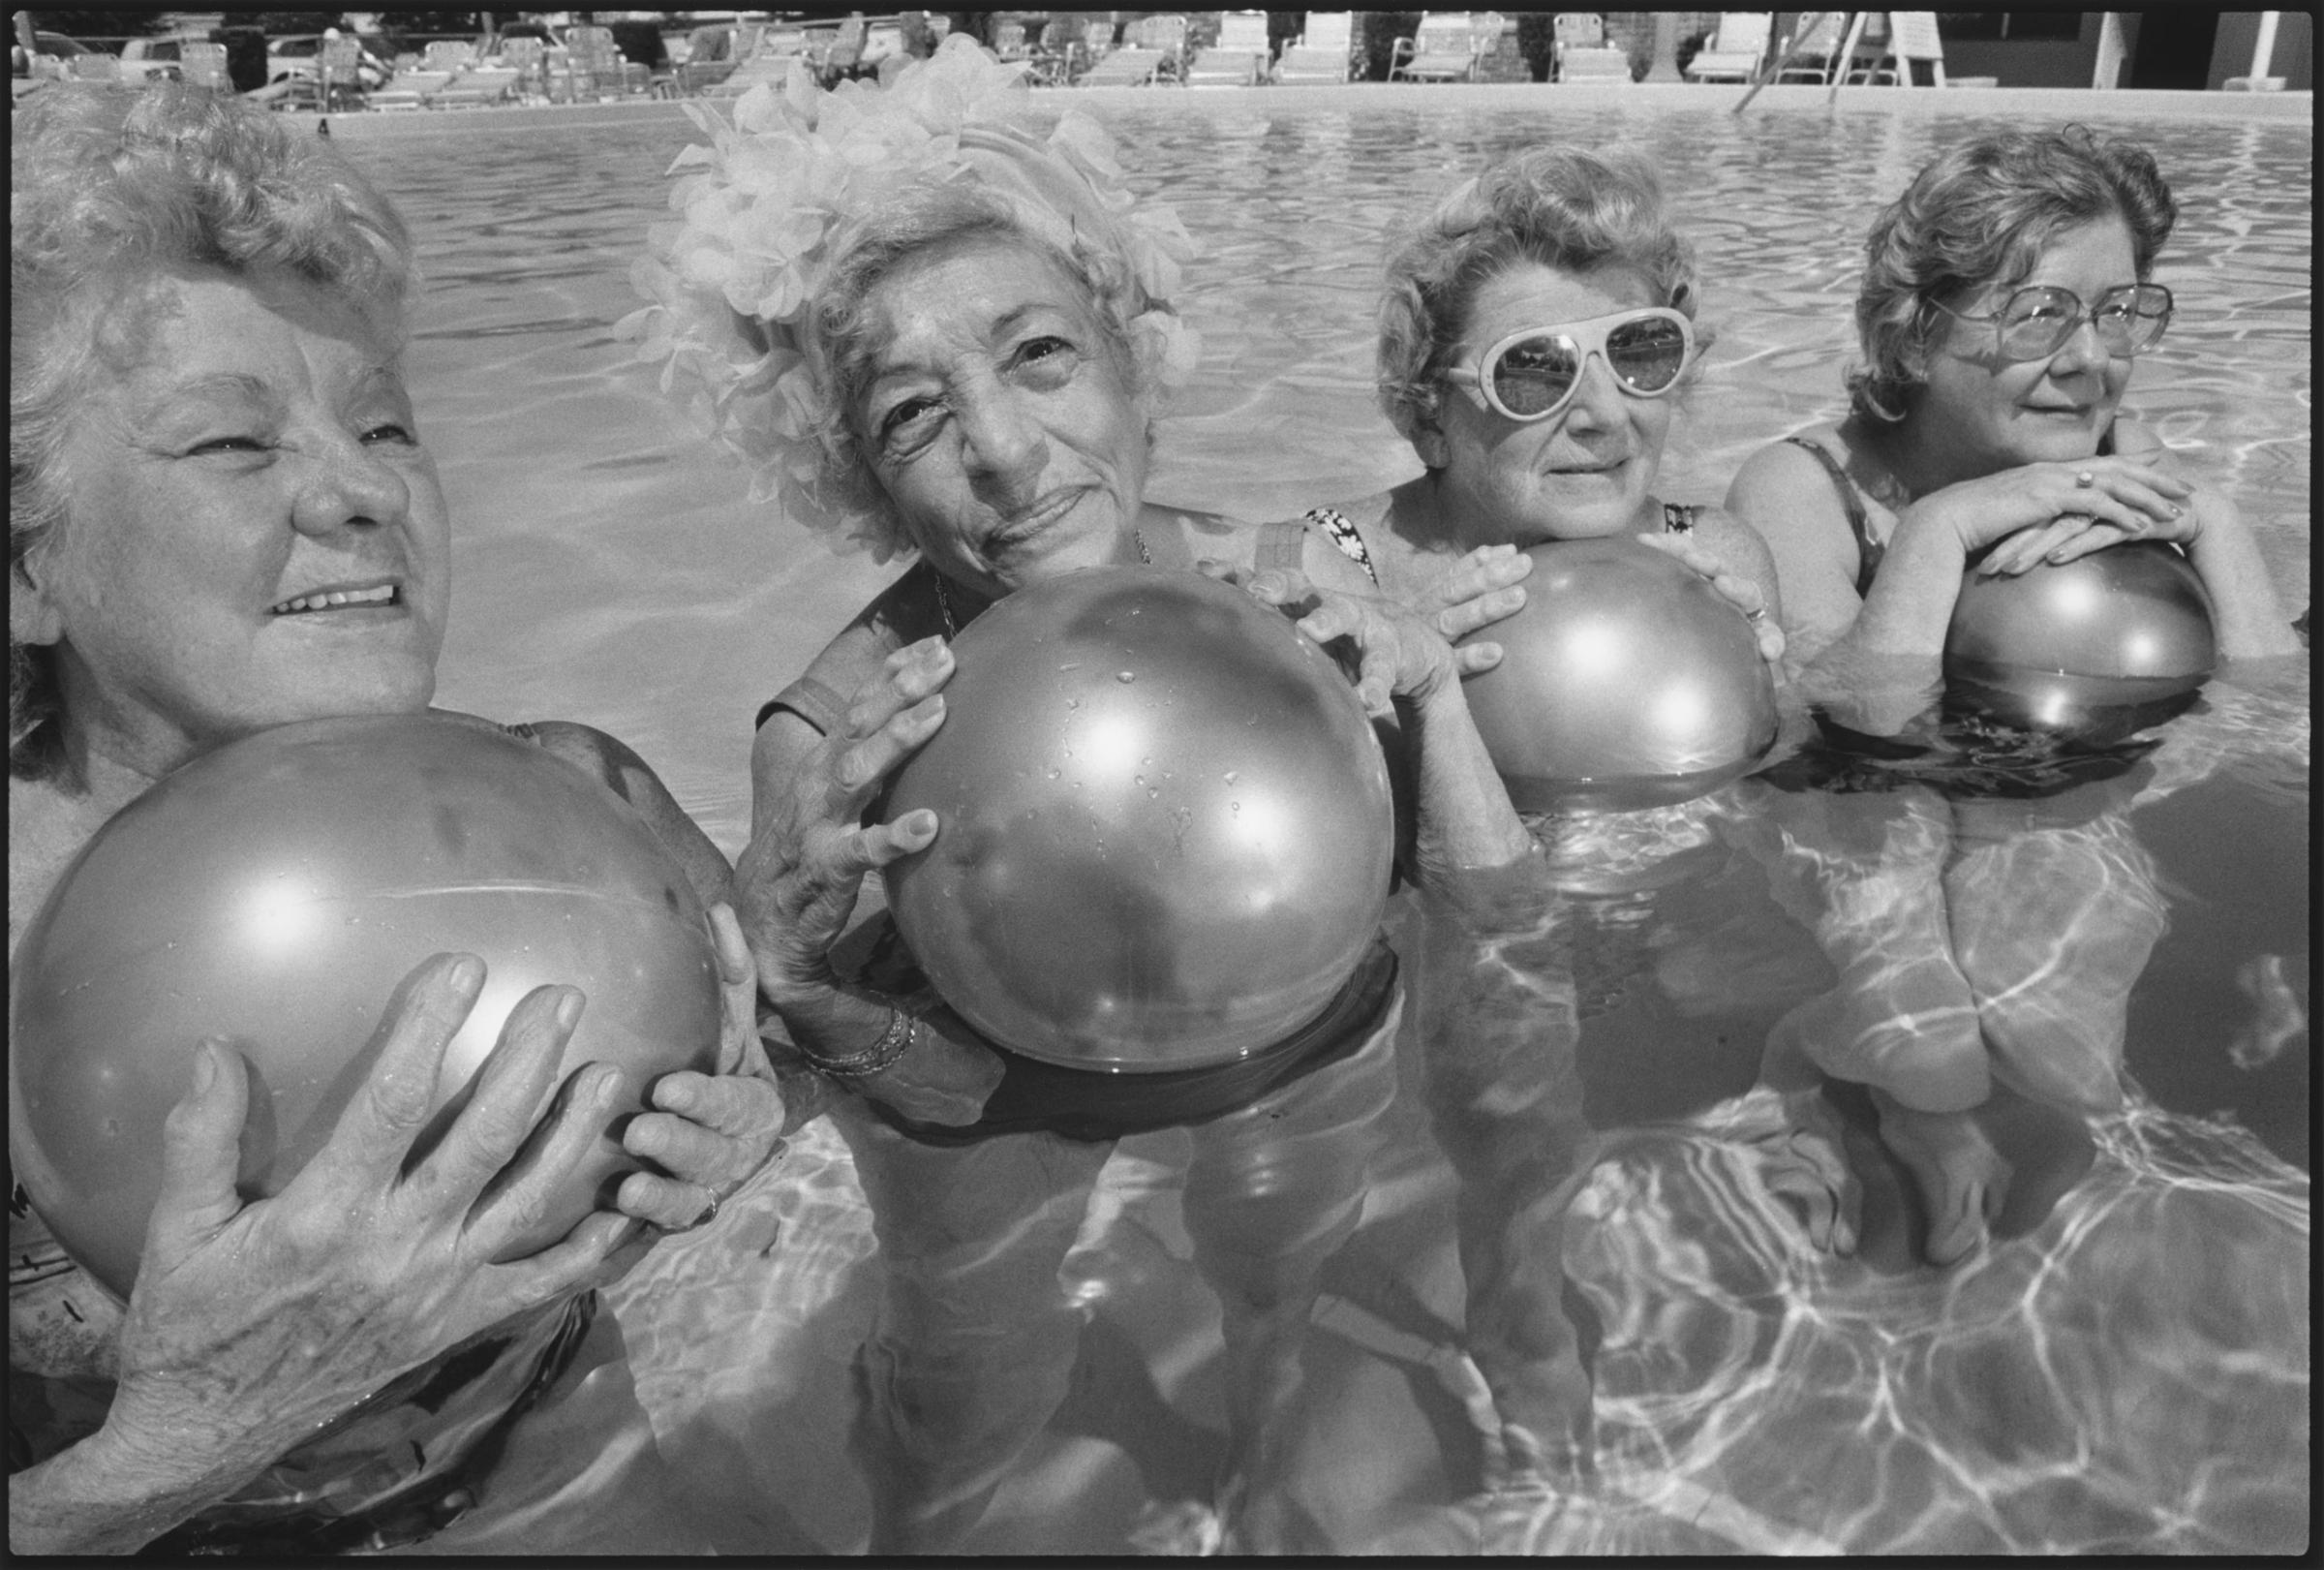 Water Exercise Group, St. Petersburg, Florida, USA, 1986